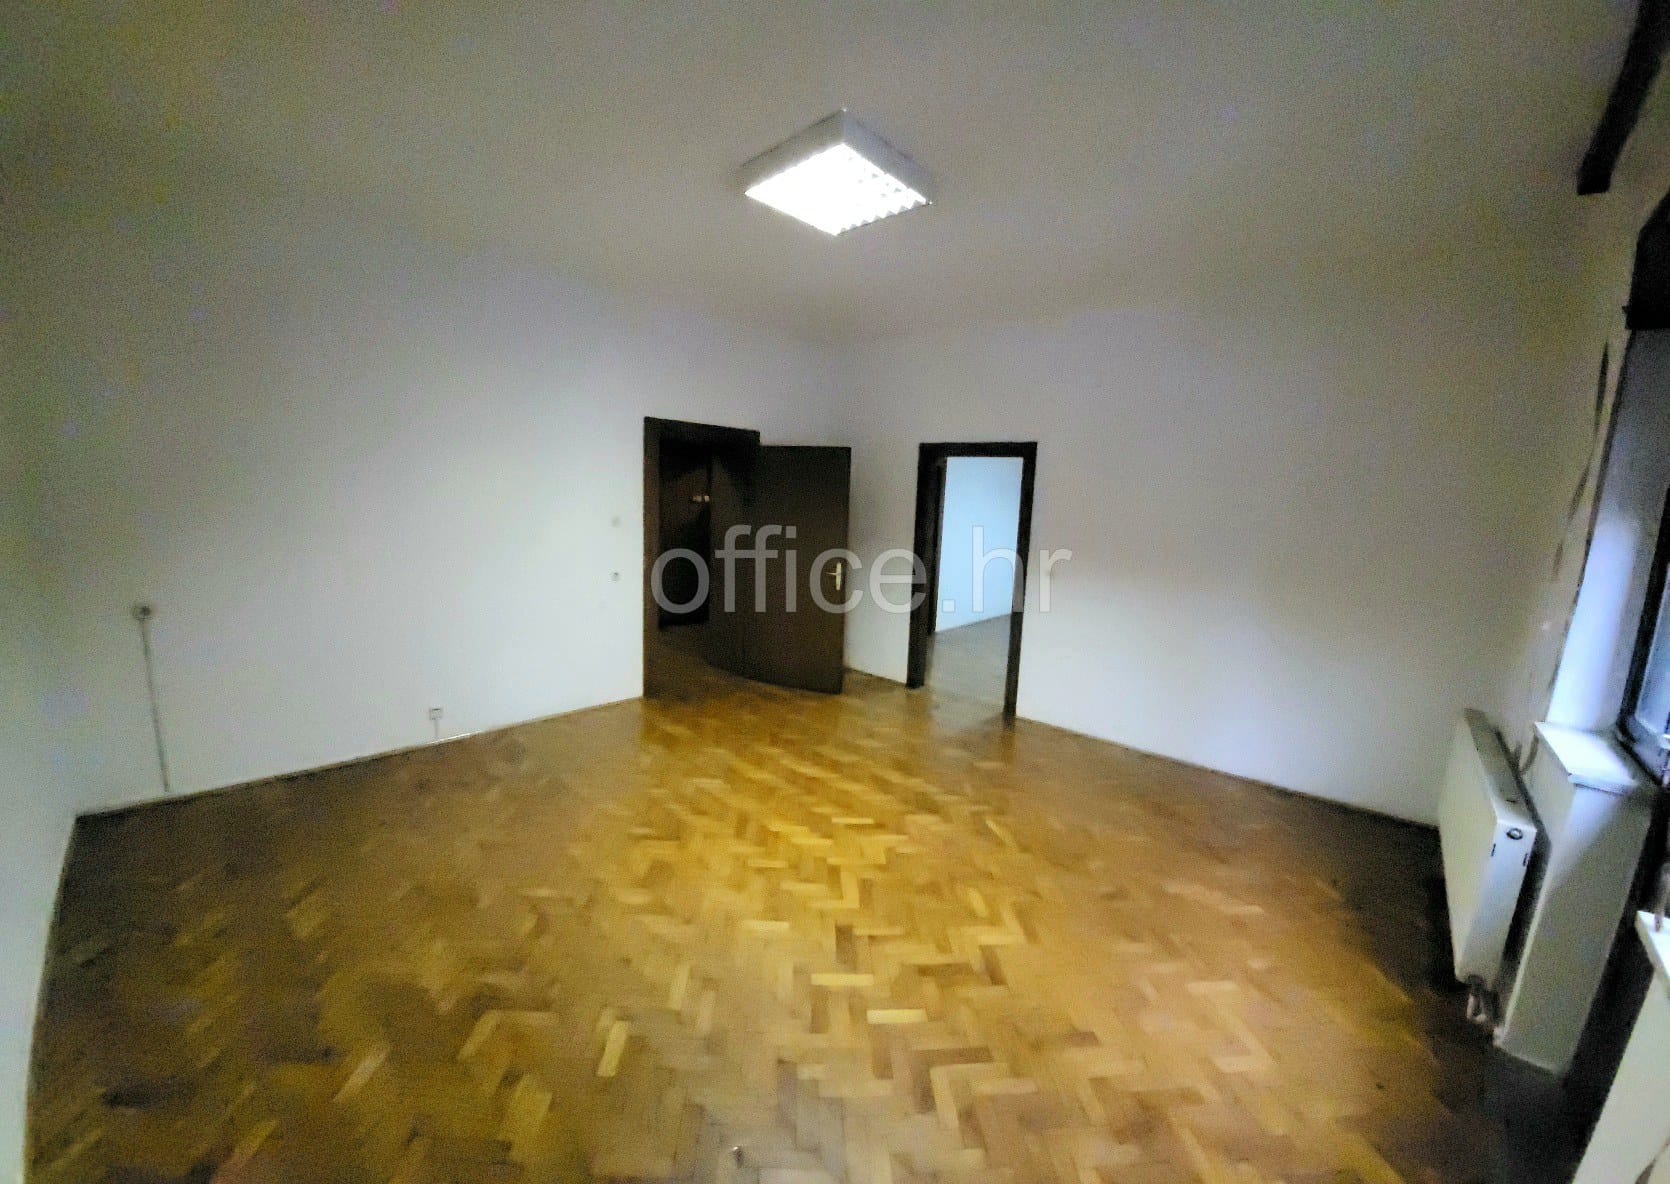 Zagreb, Downtown, Bužanova street, 3 room office space for rent, 98sqm, 1st floor